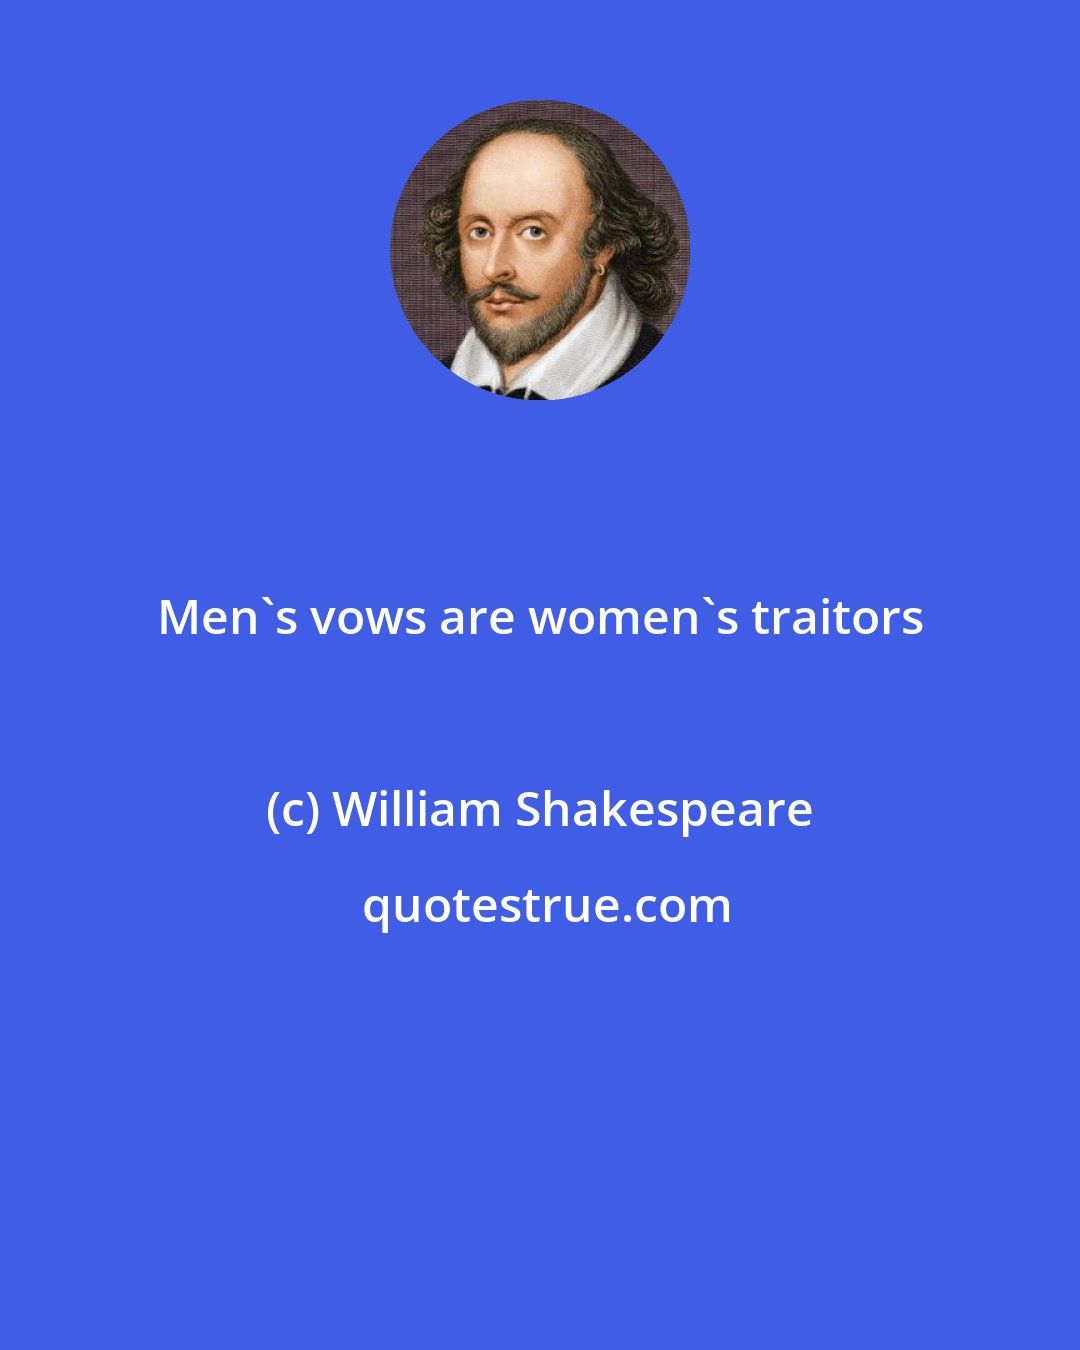 William Shakespeare: Men's vows are women's traitors